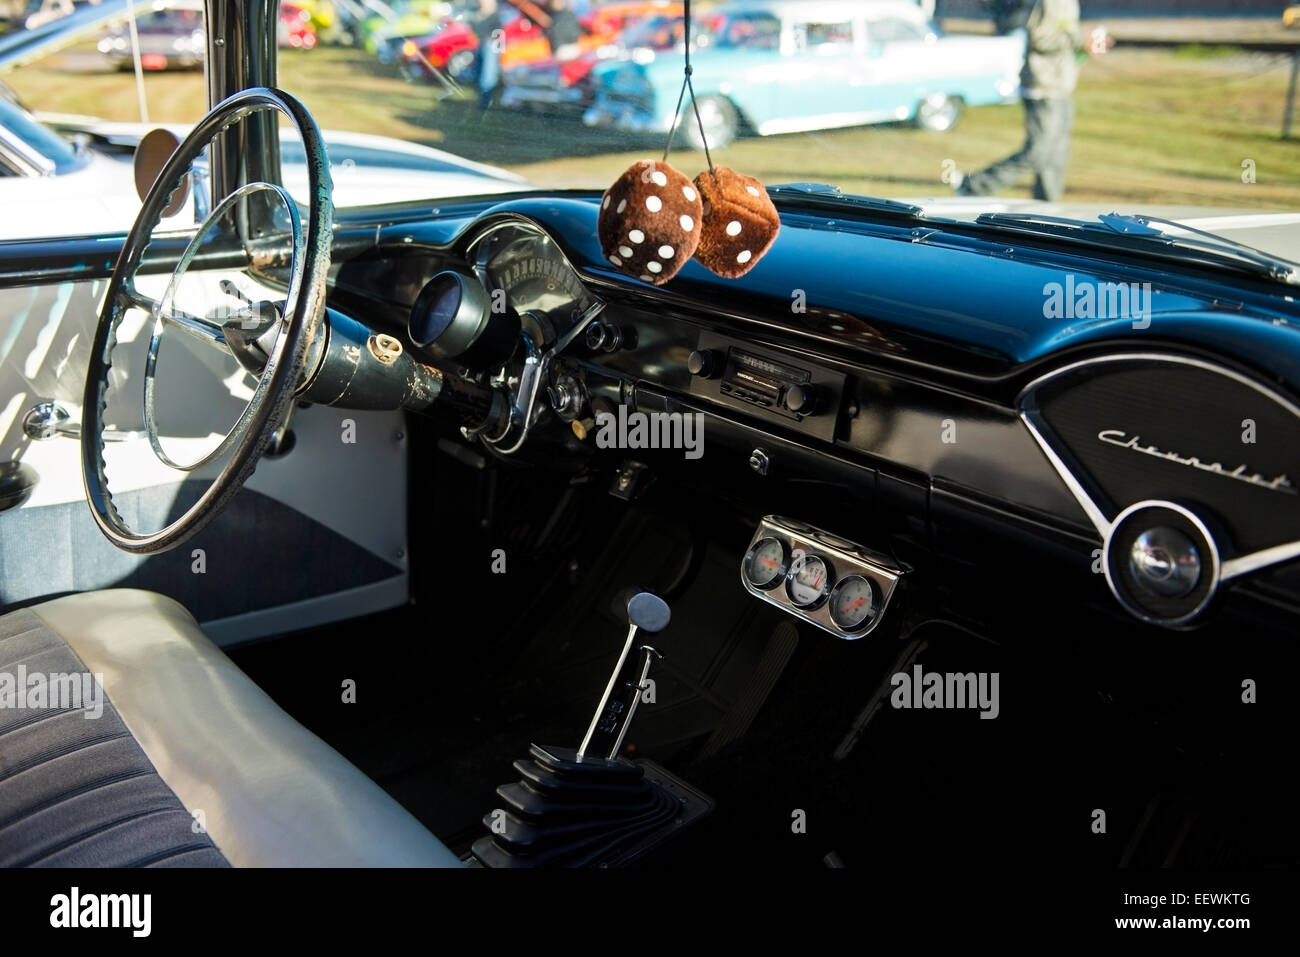 Car dice -Fotos und -Bildmaterial in hoher Auflösung – Alamy